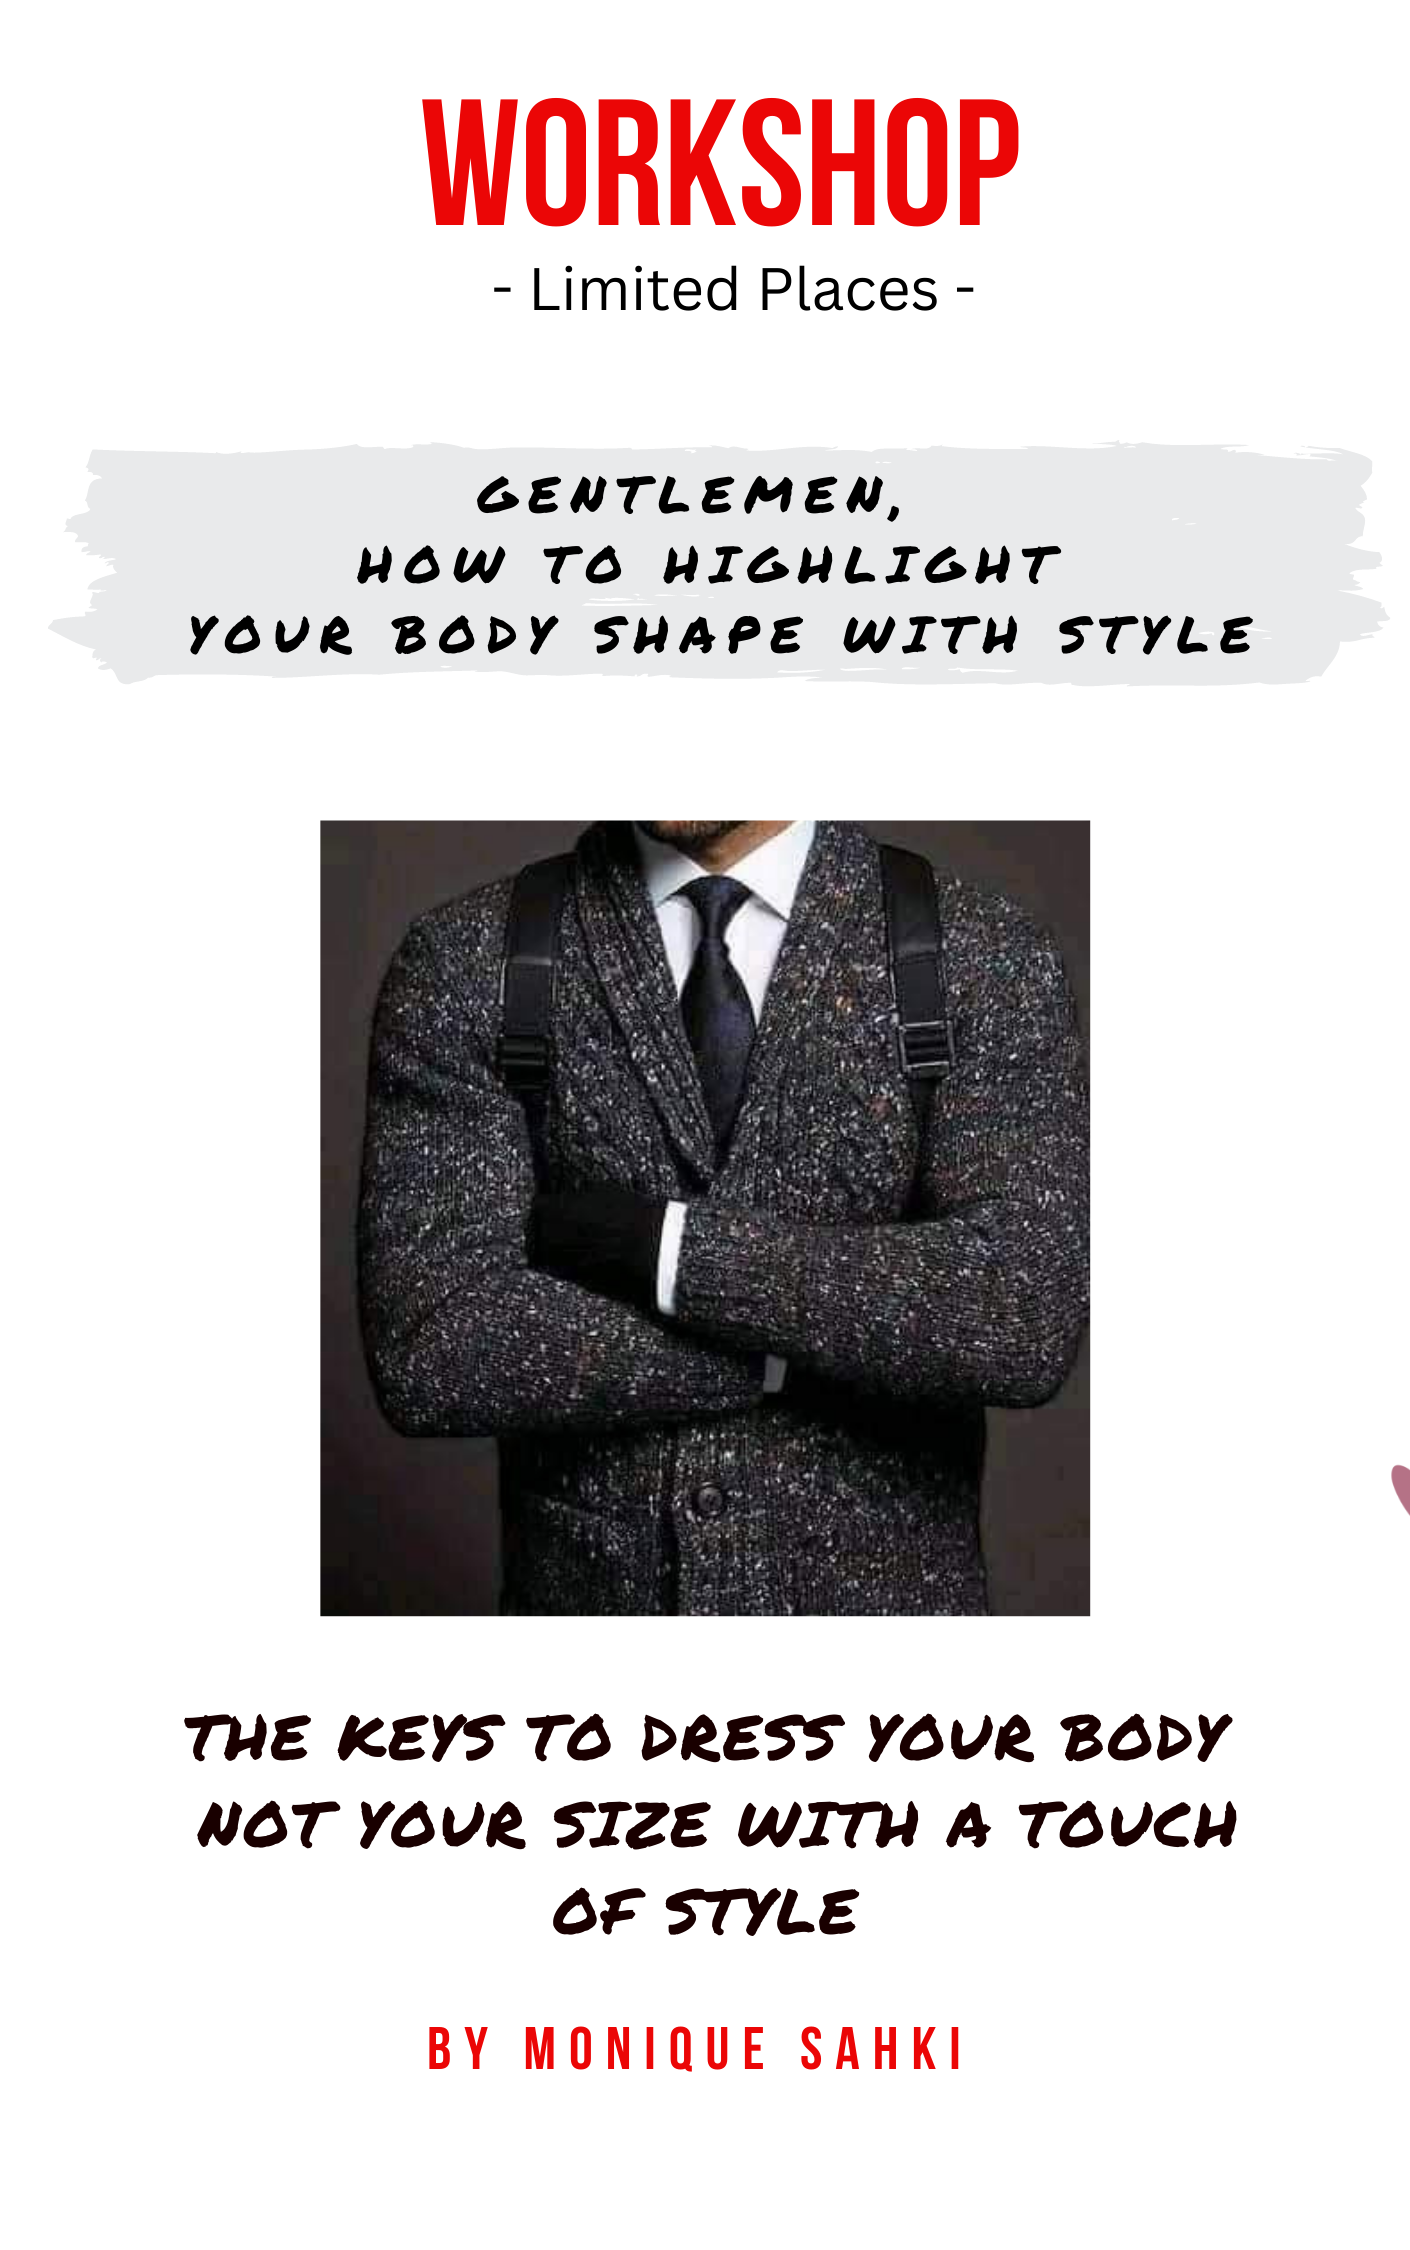 image highlight your body shape gentlemen.png